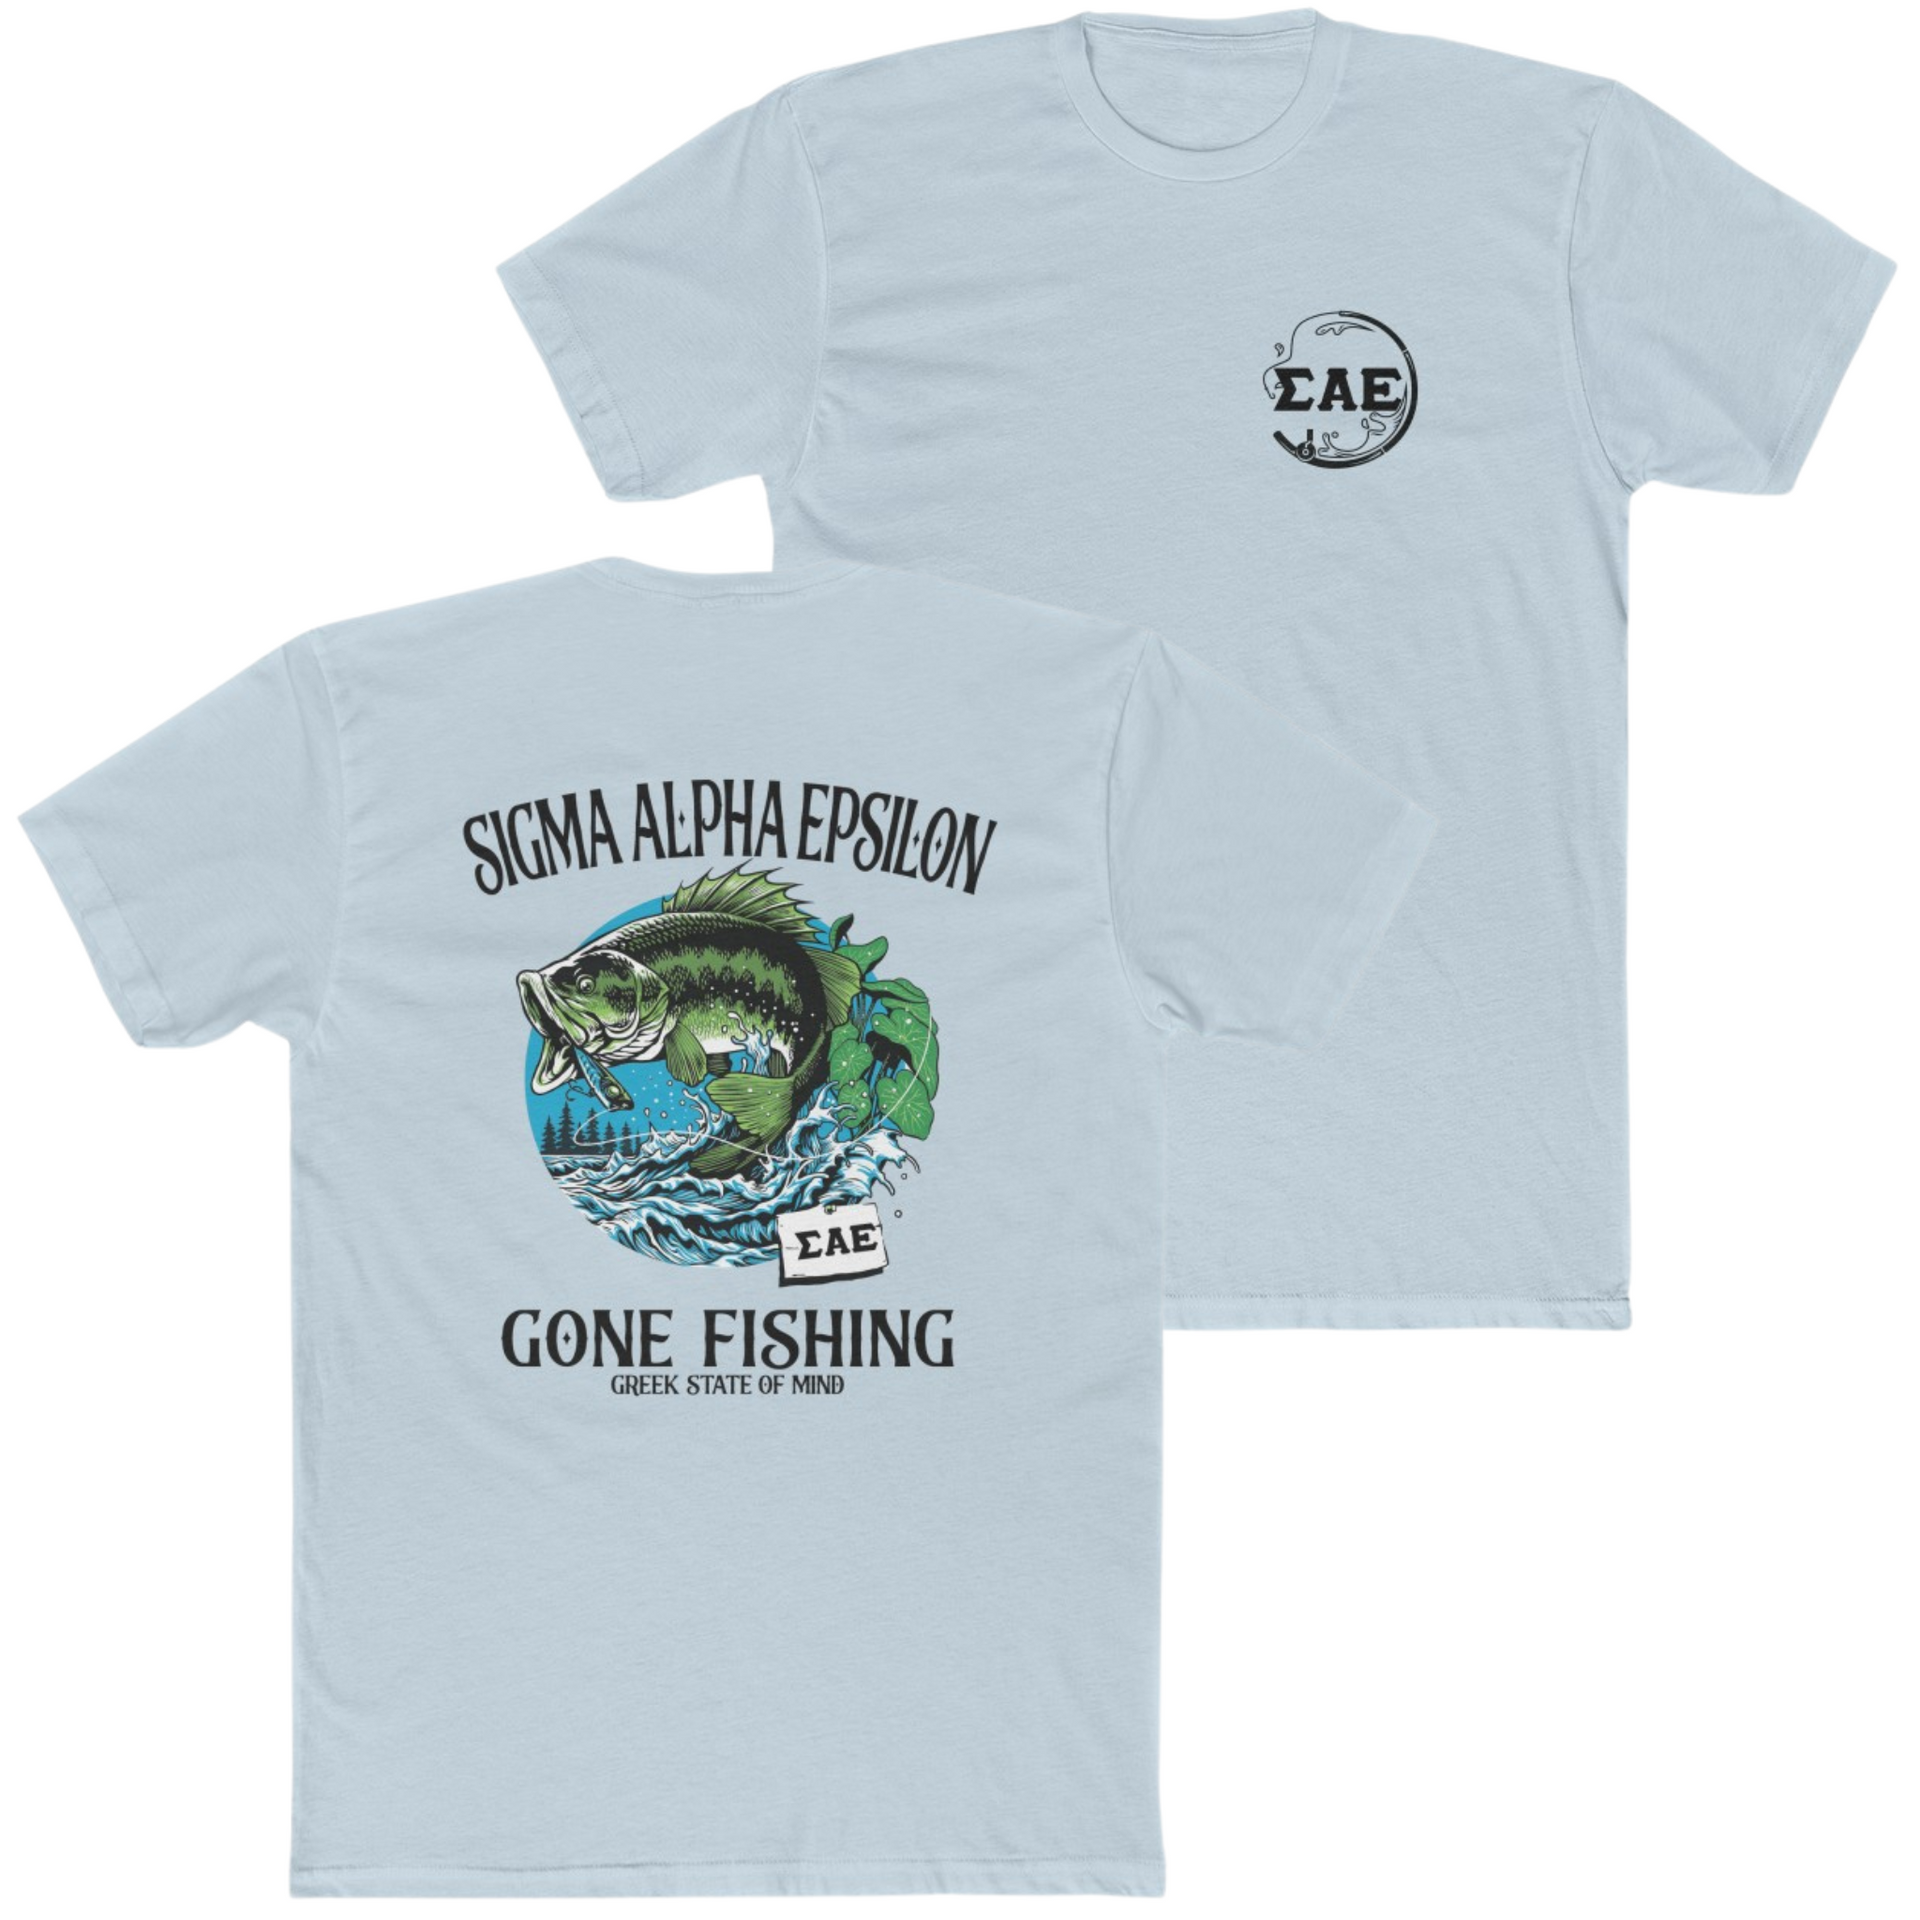 Light Blue Sigma Alpha Epsilon Graphic T-Shirt | Gone Fishing | Sigma Alpha Epsilon Clothing and Merchandise